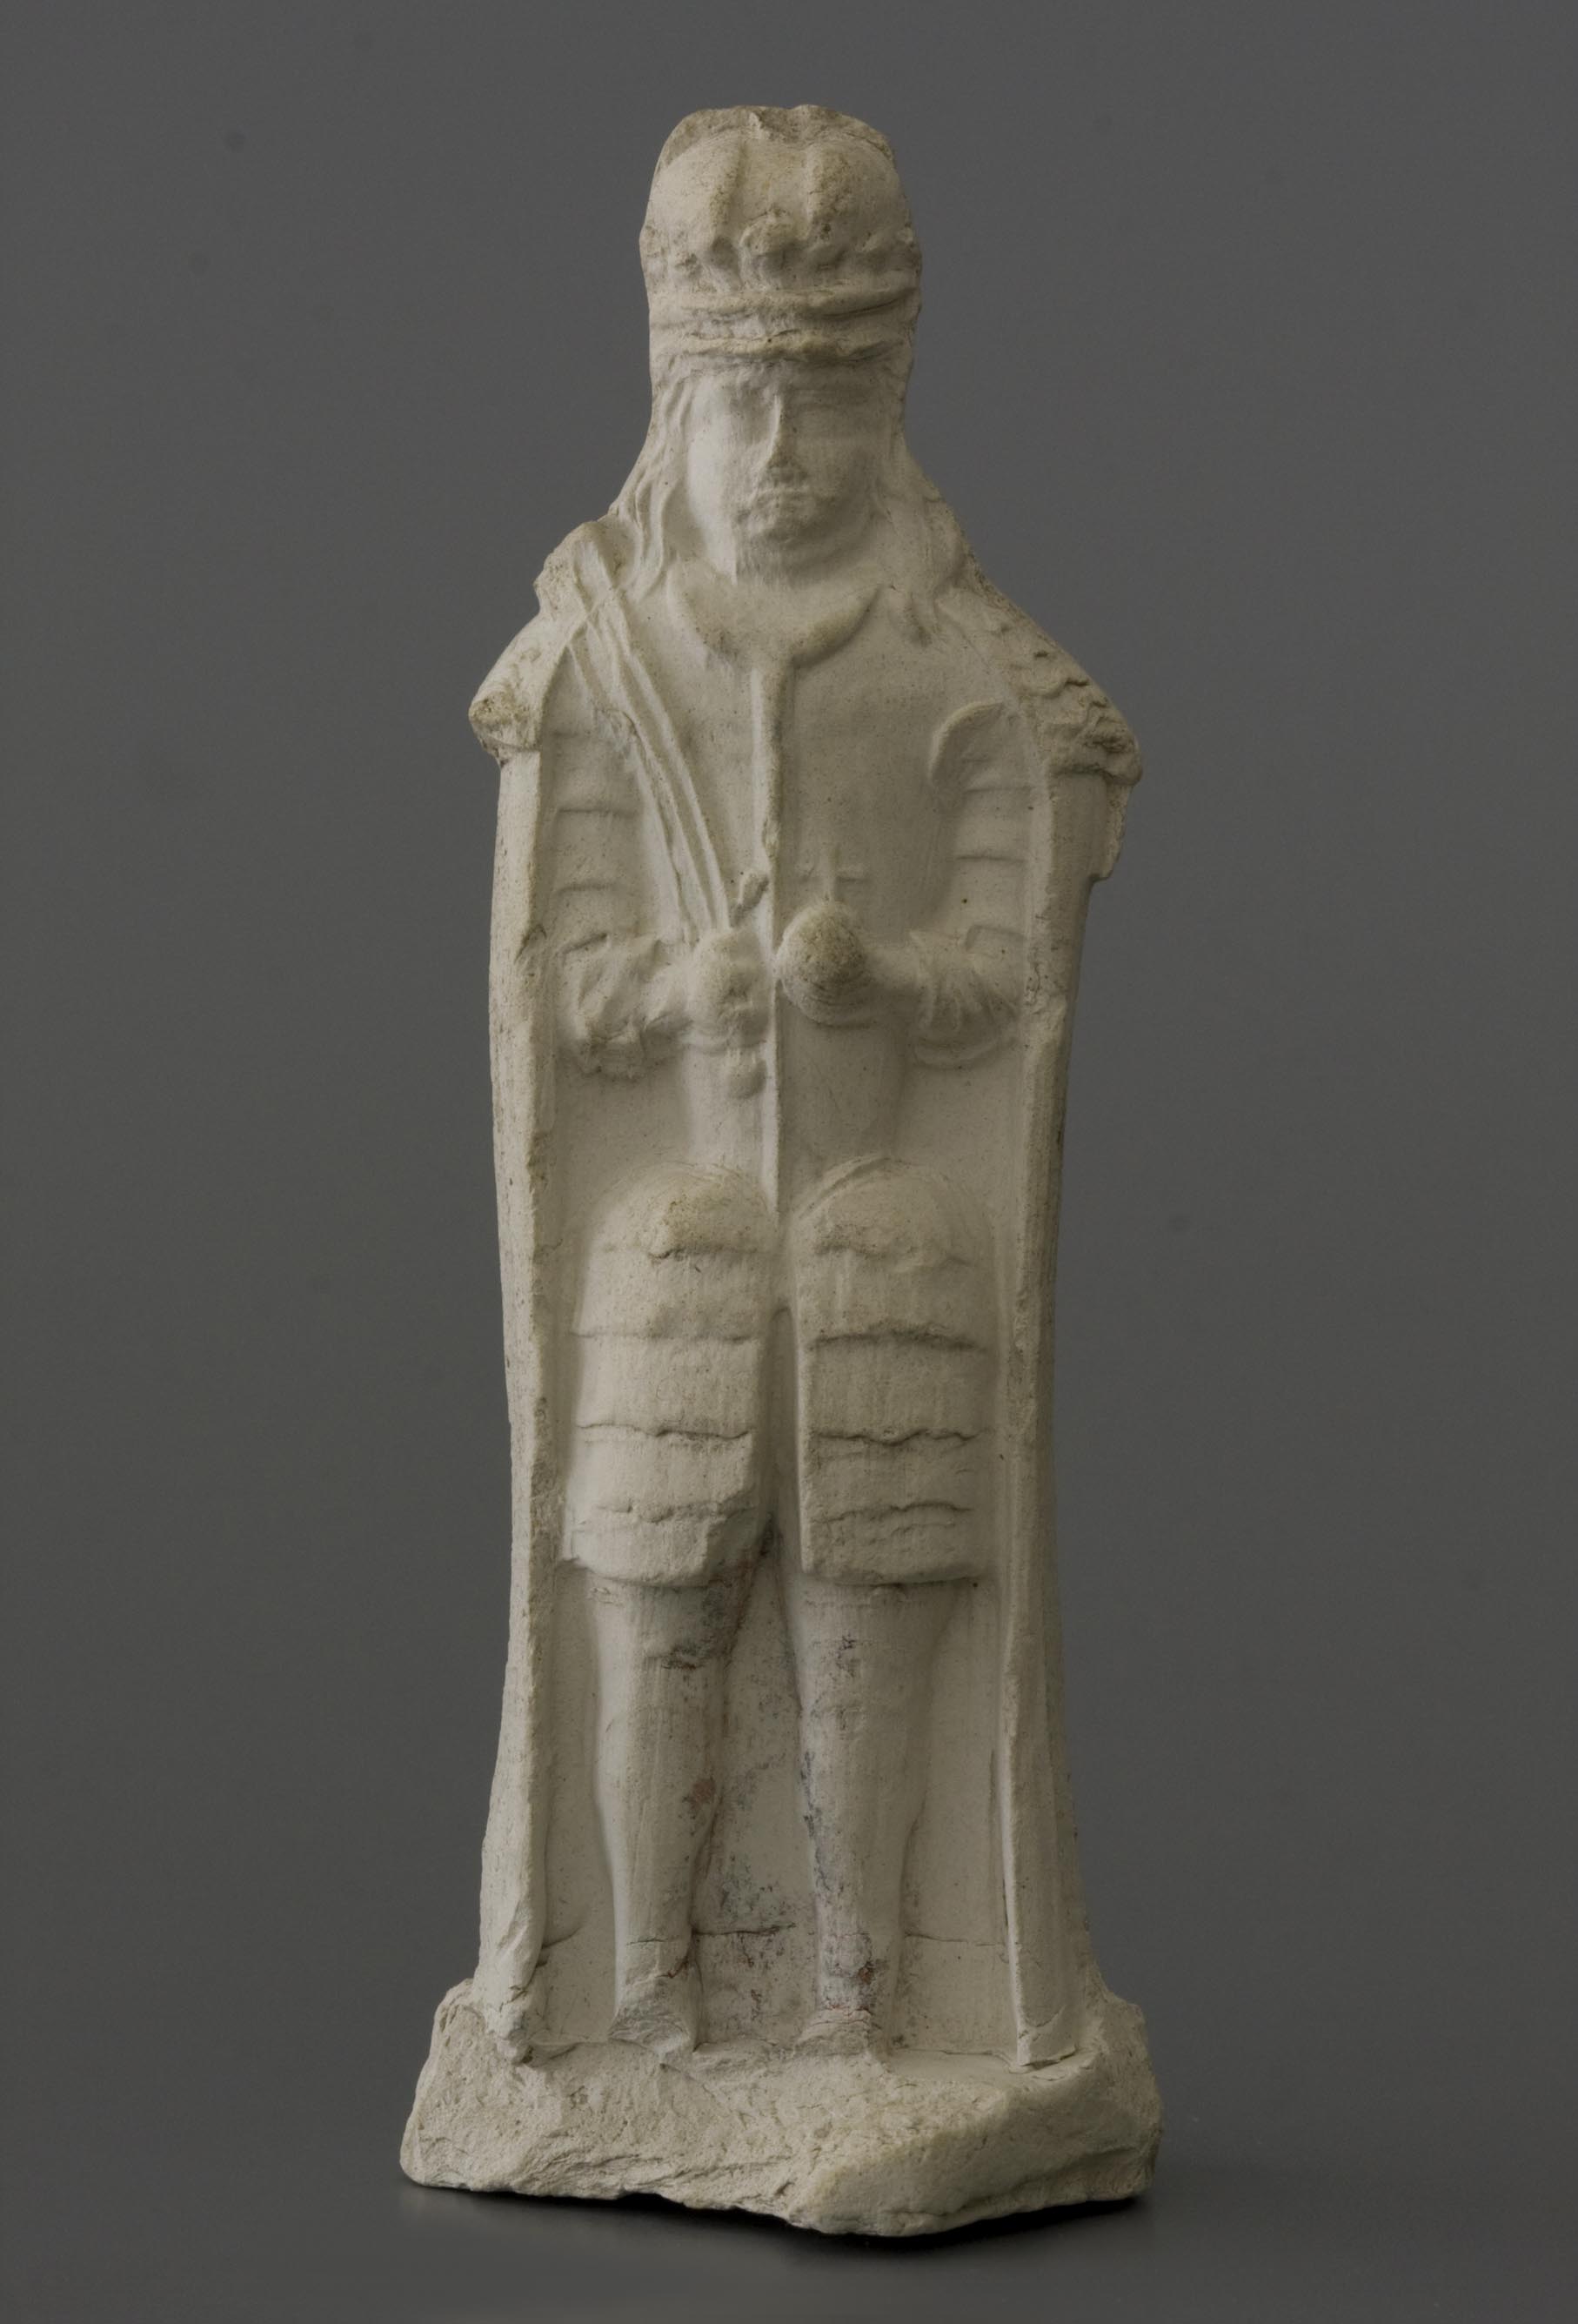 10-16.840-pipeclay-figurine-king-1